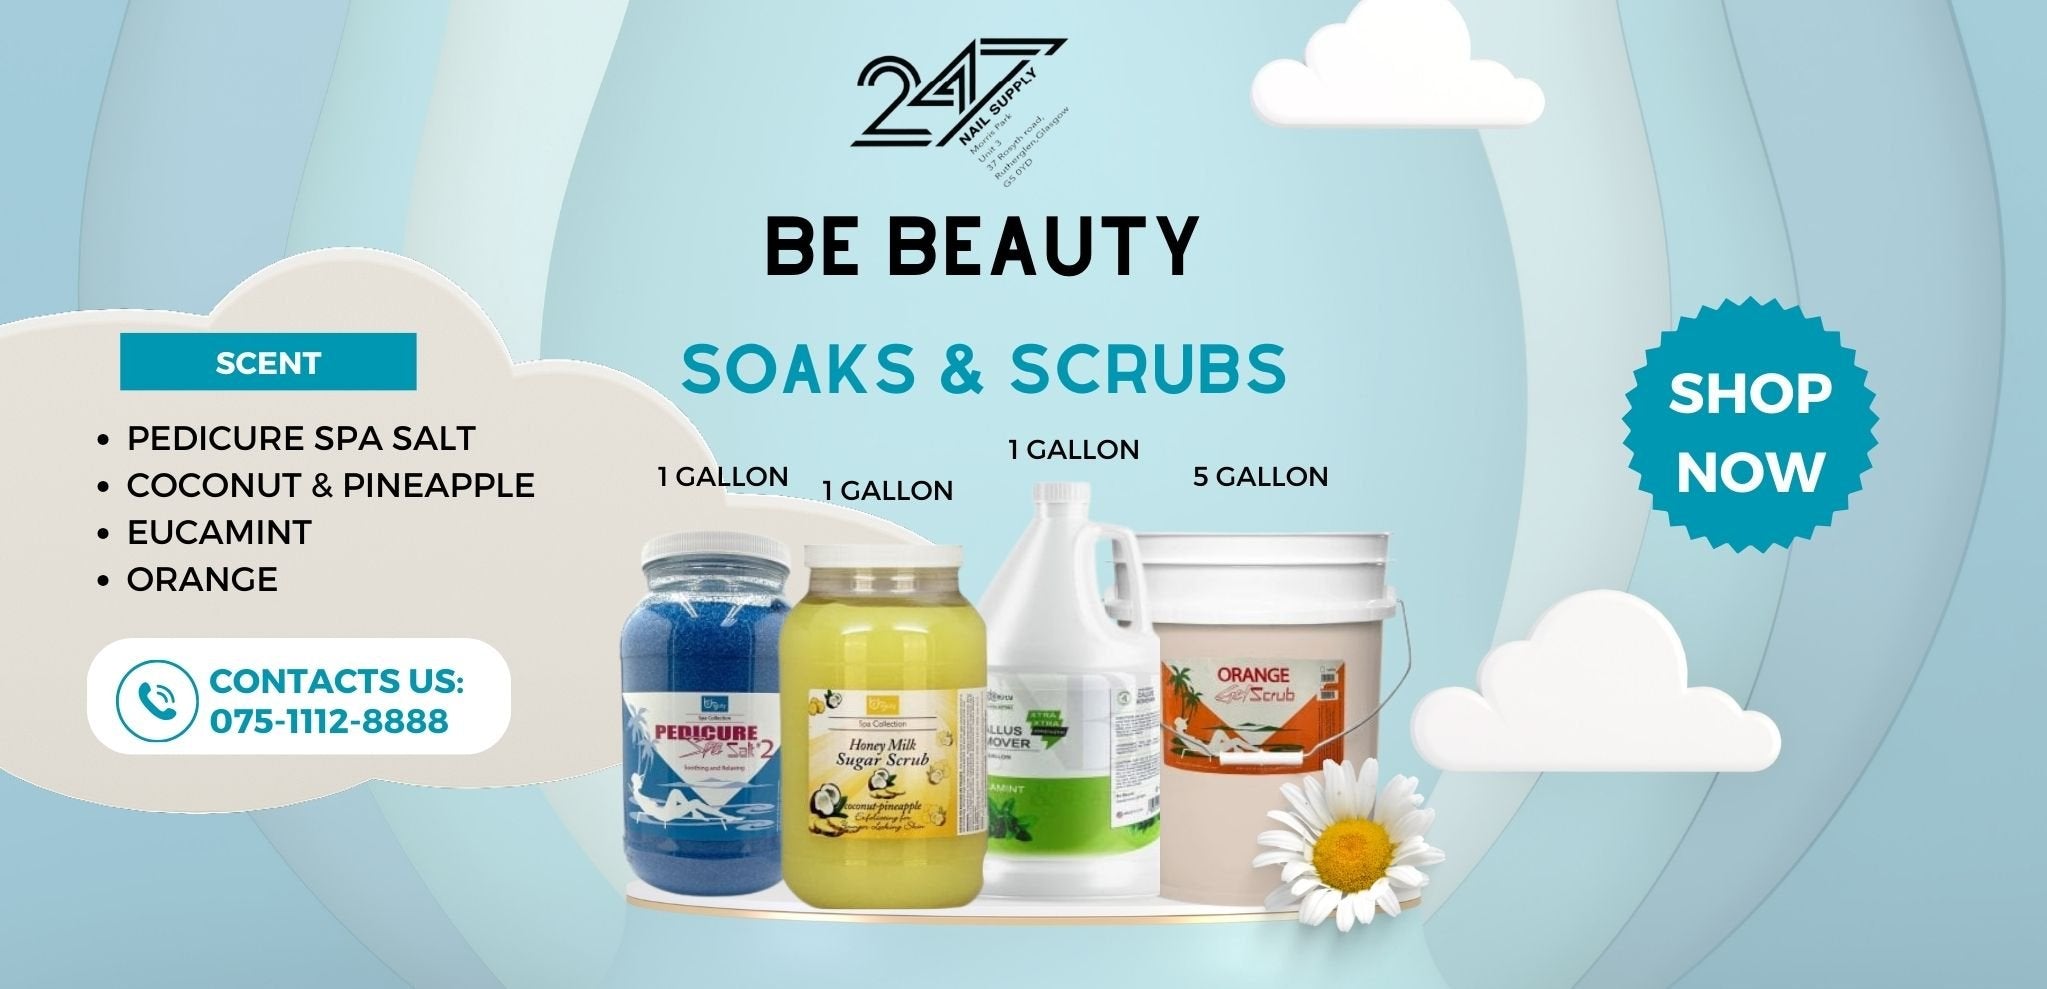 soaks-and-scrubs-be-beauty-desktop-247-nail-supplies-uk